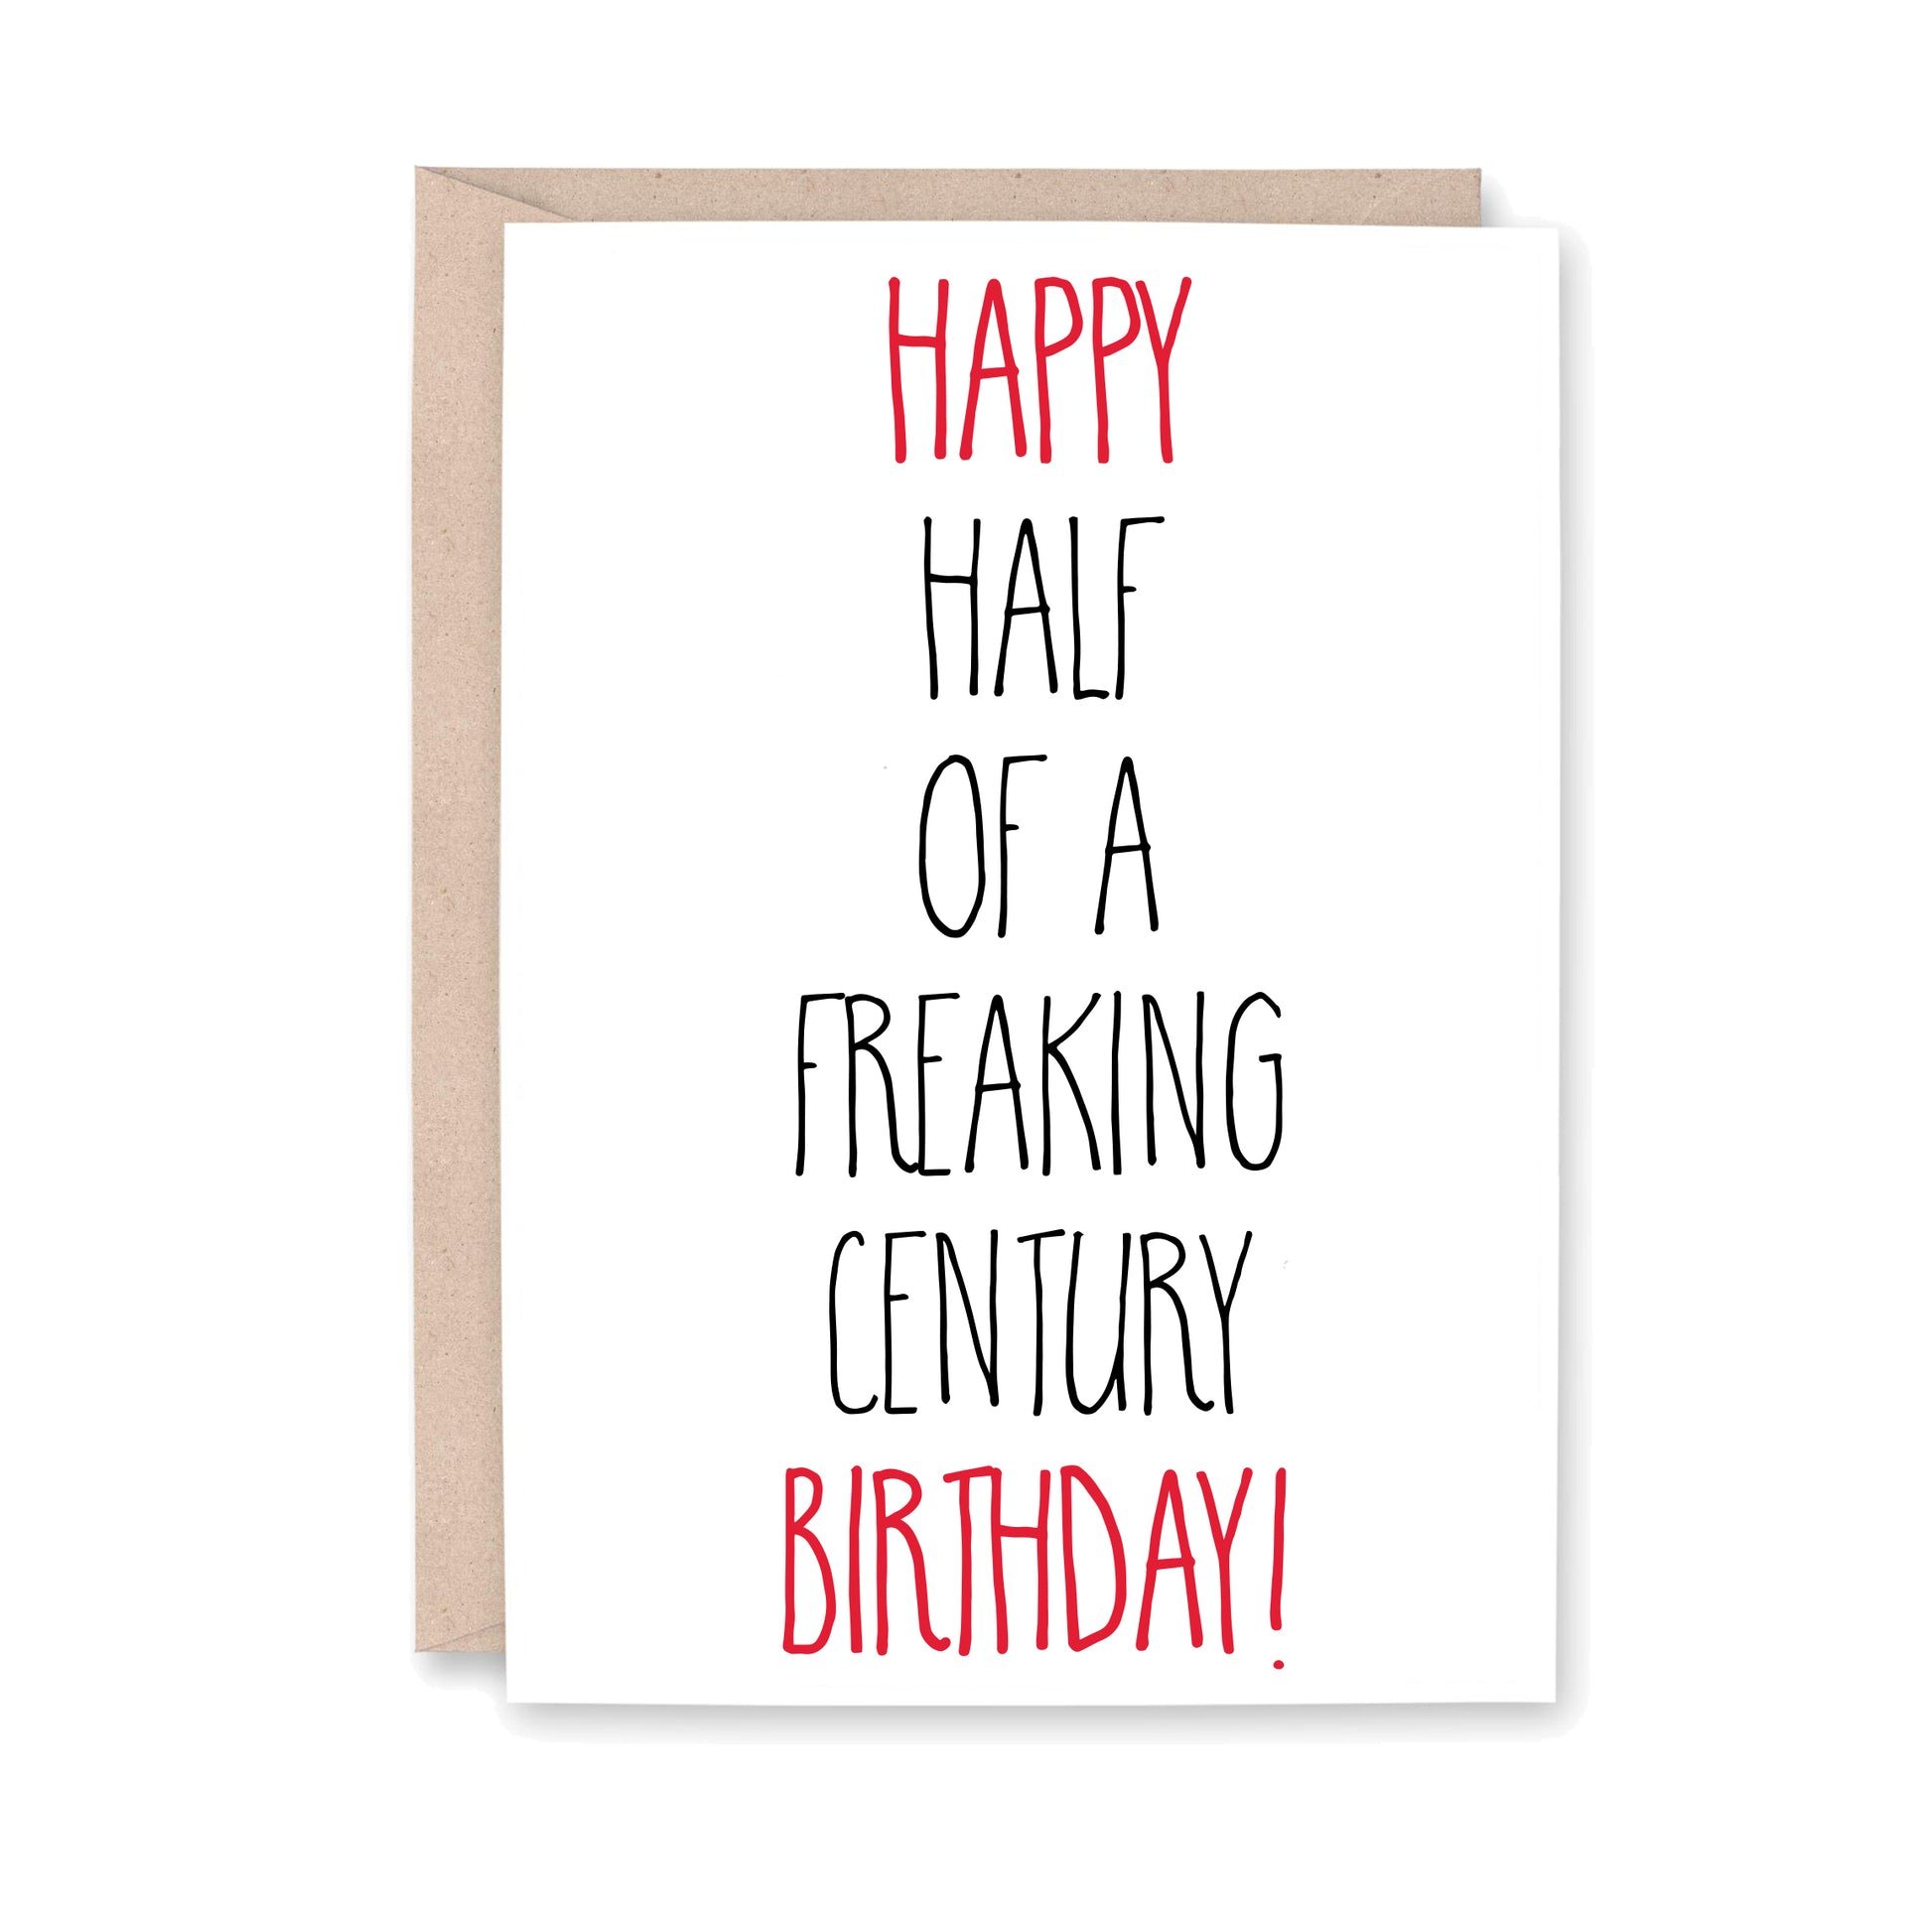 Happy Half of a Freaking Century Birthday!